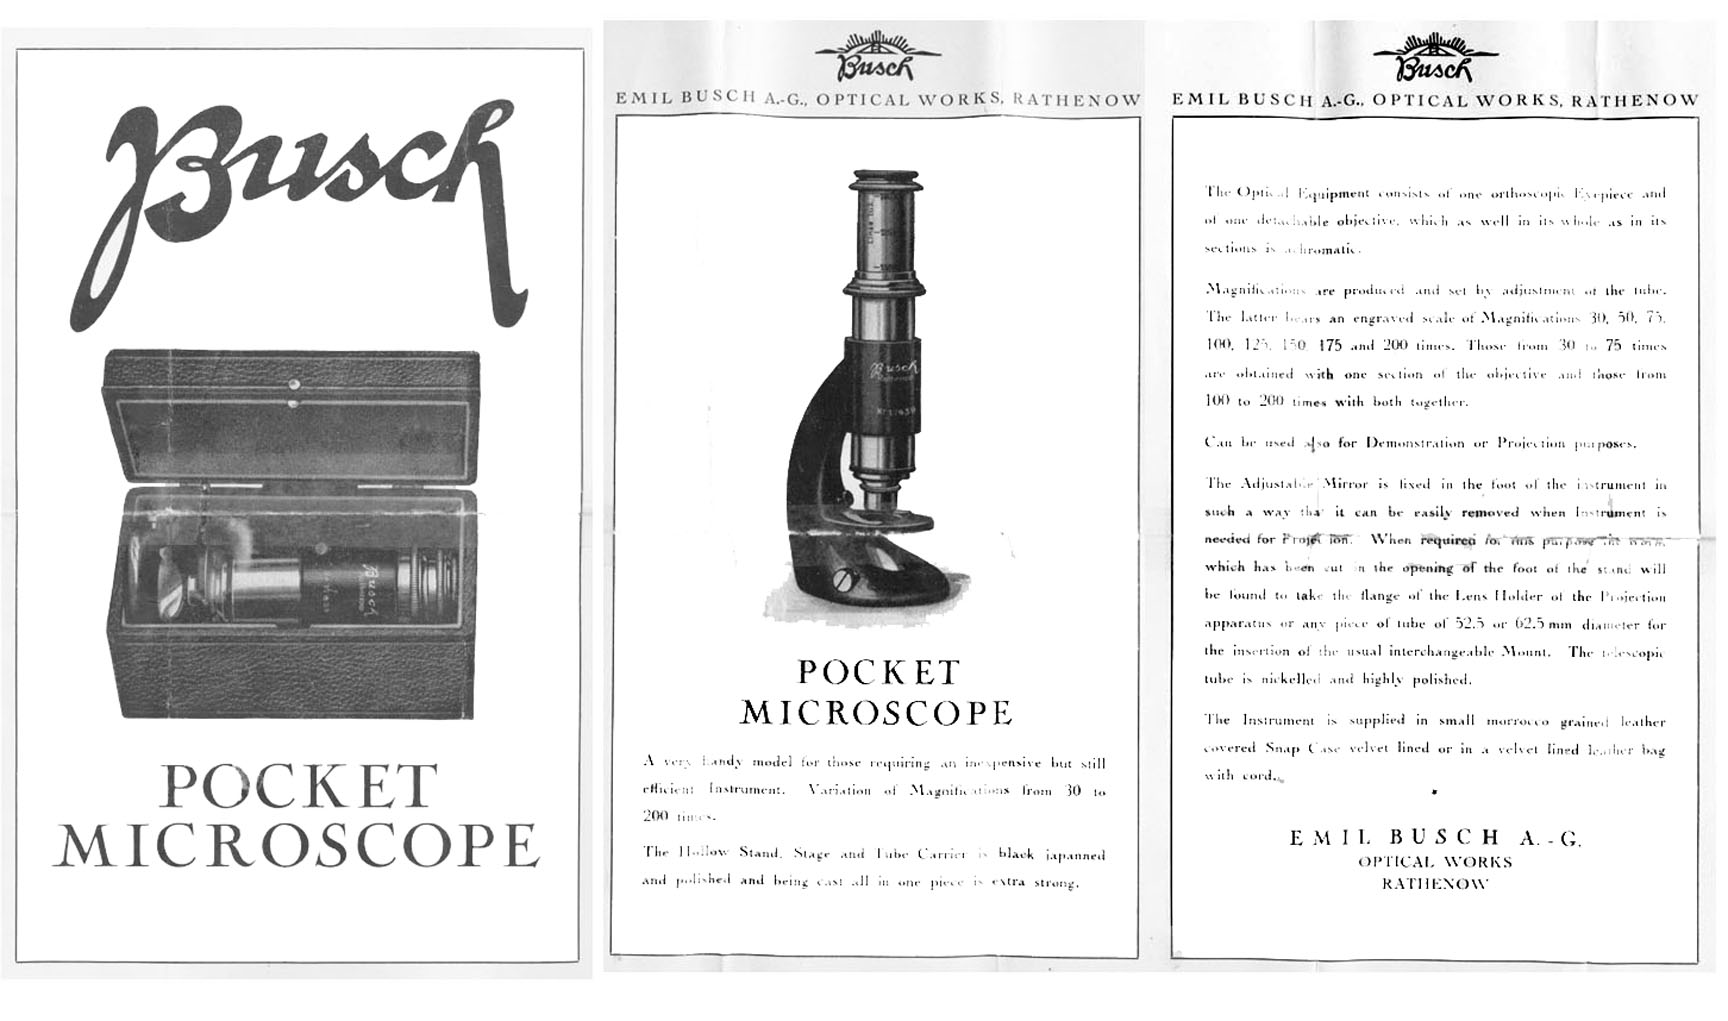  busch pocket Microscope brochure